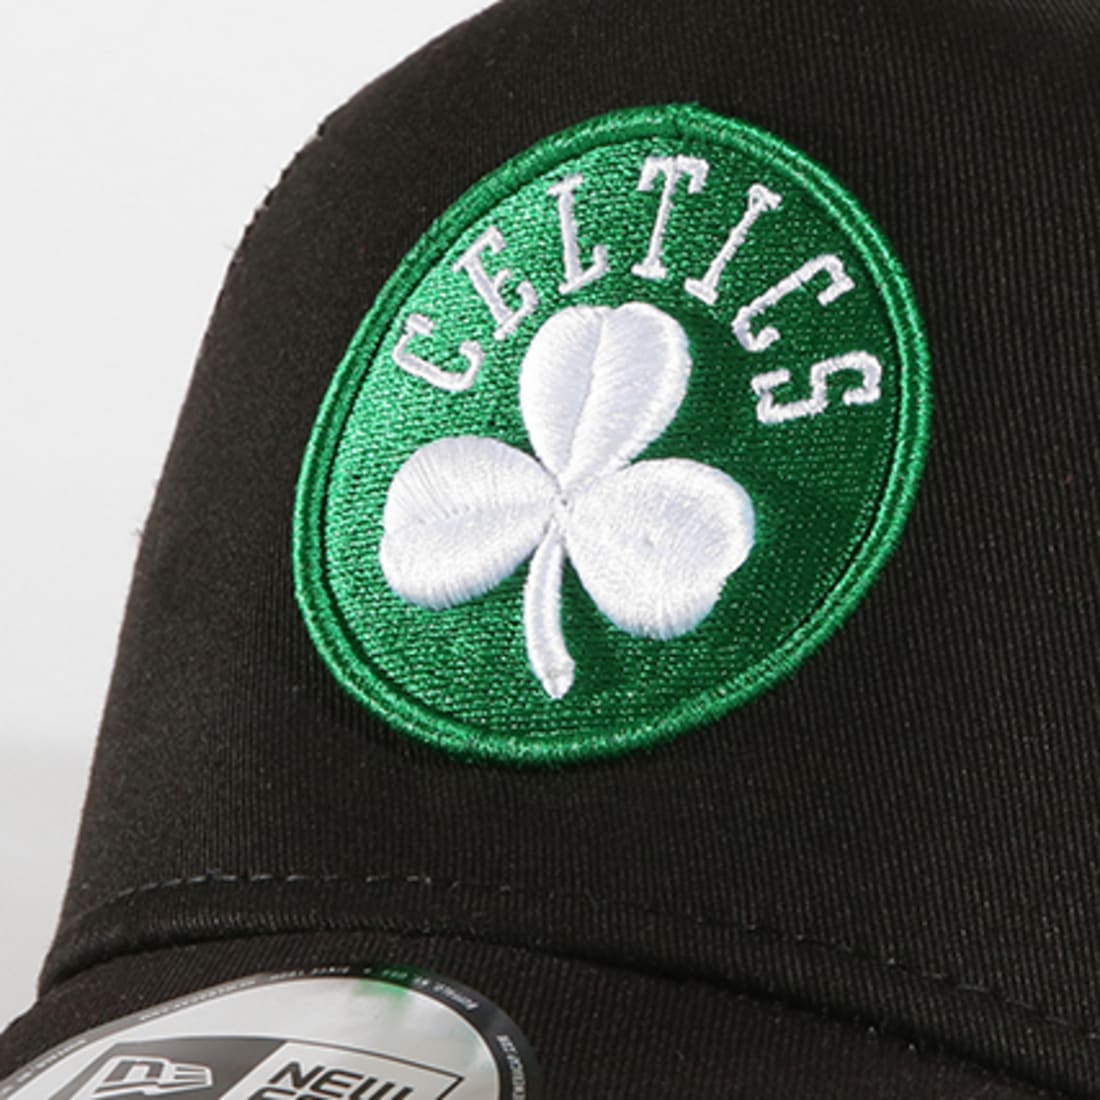 New Era Casquette Trucker A-Frame Reverse Team Boston Celtics Noir